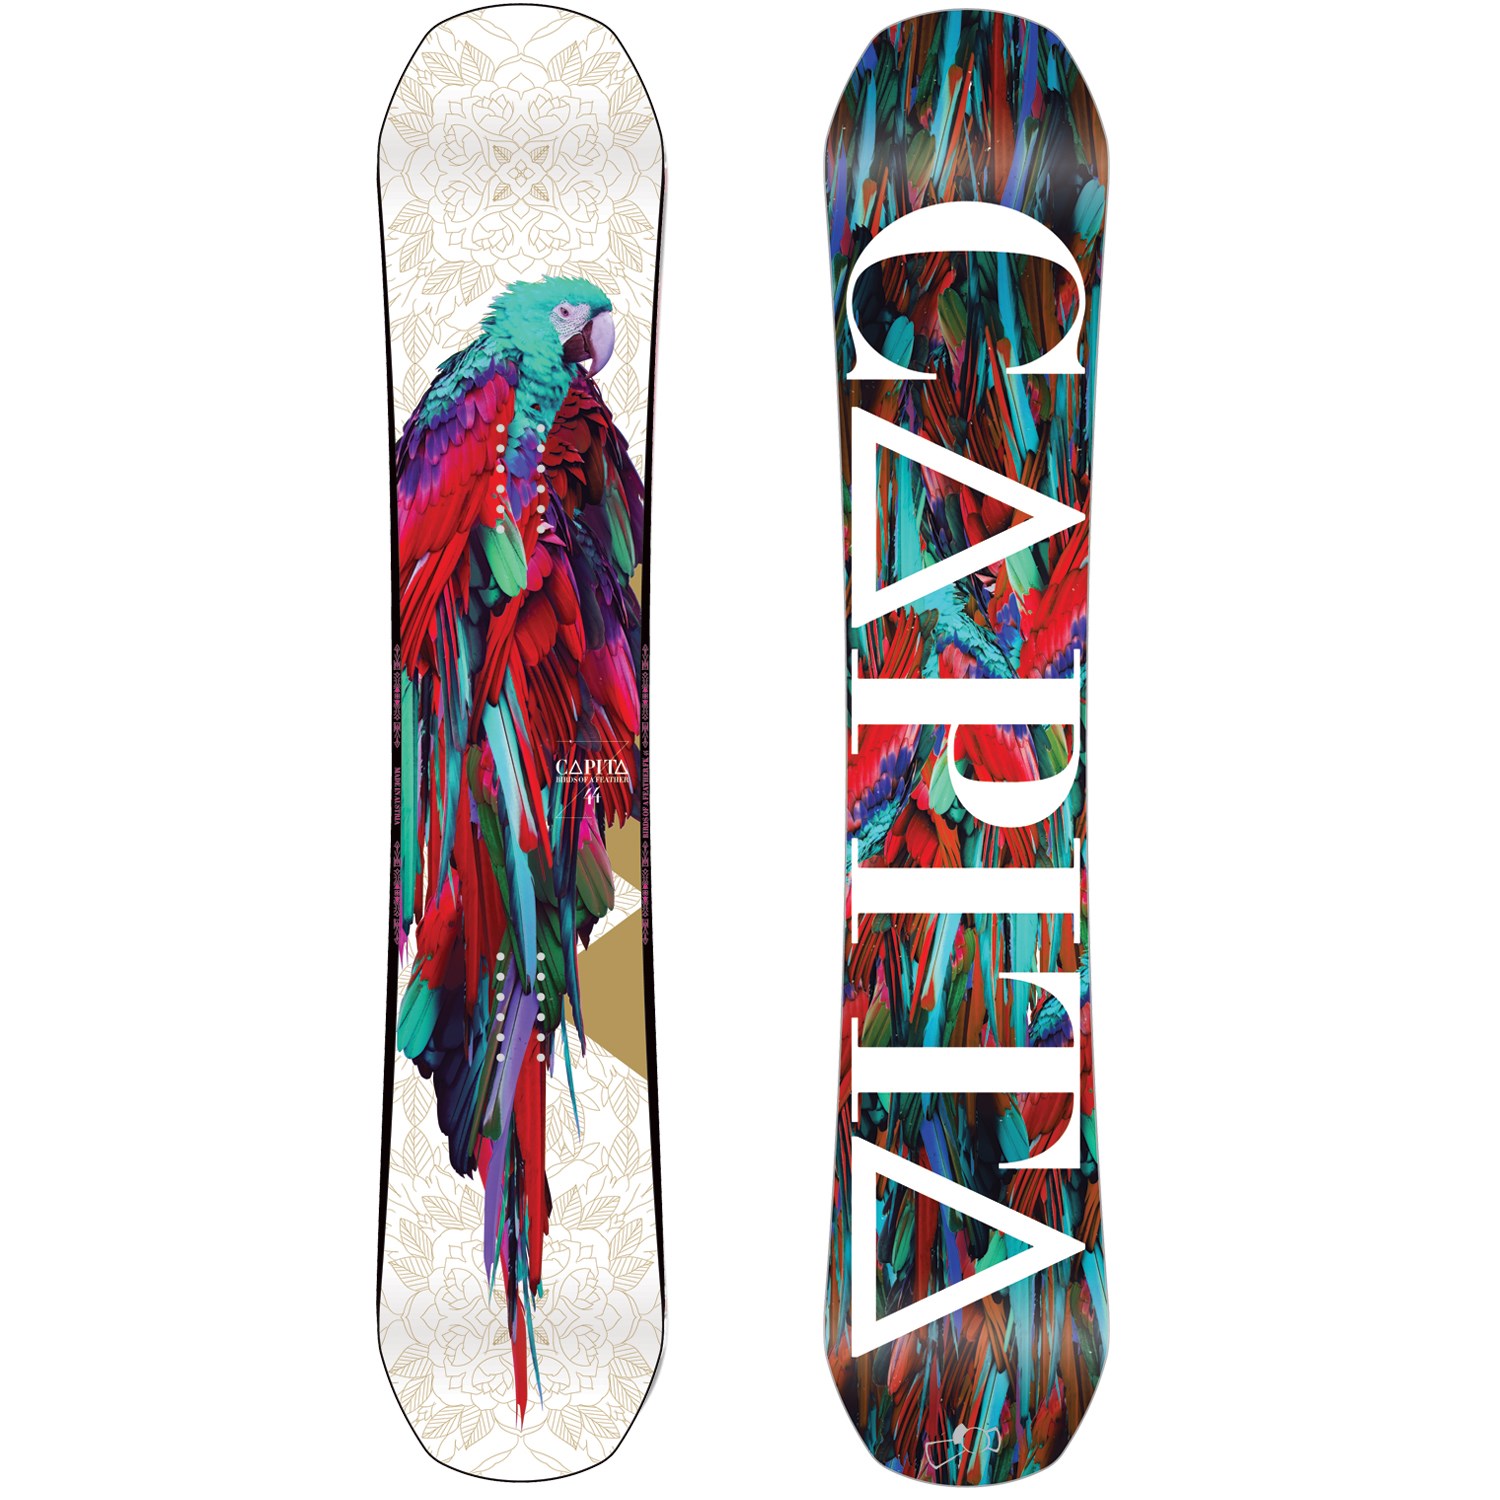 Capita Birds Of A Feather 2014/2015. The Best Women’s Snowboard Designs